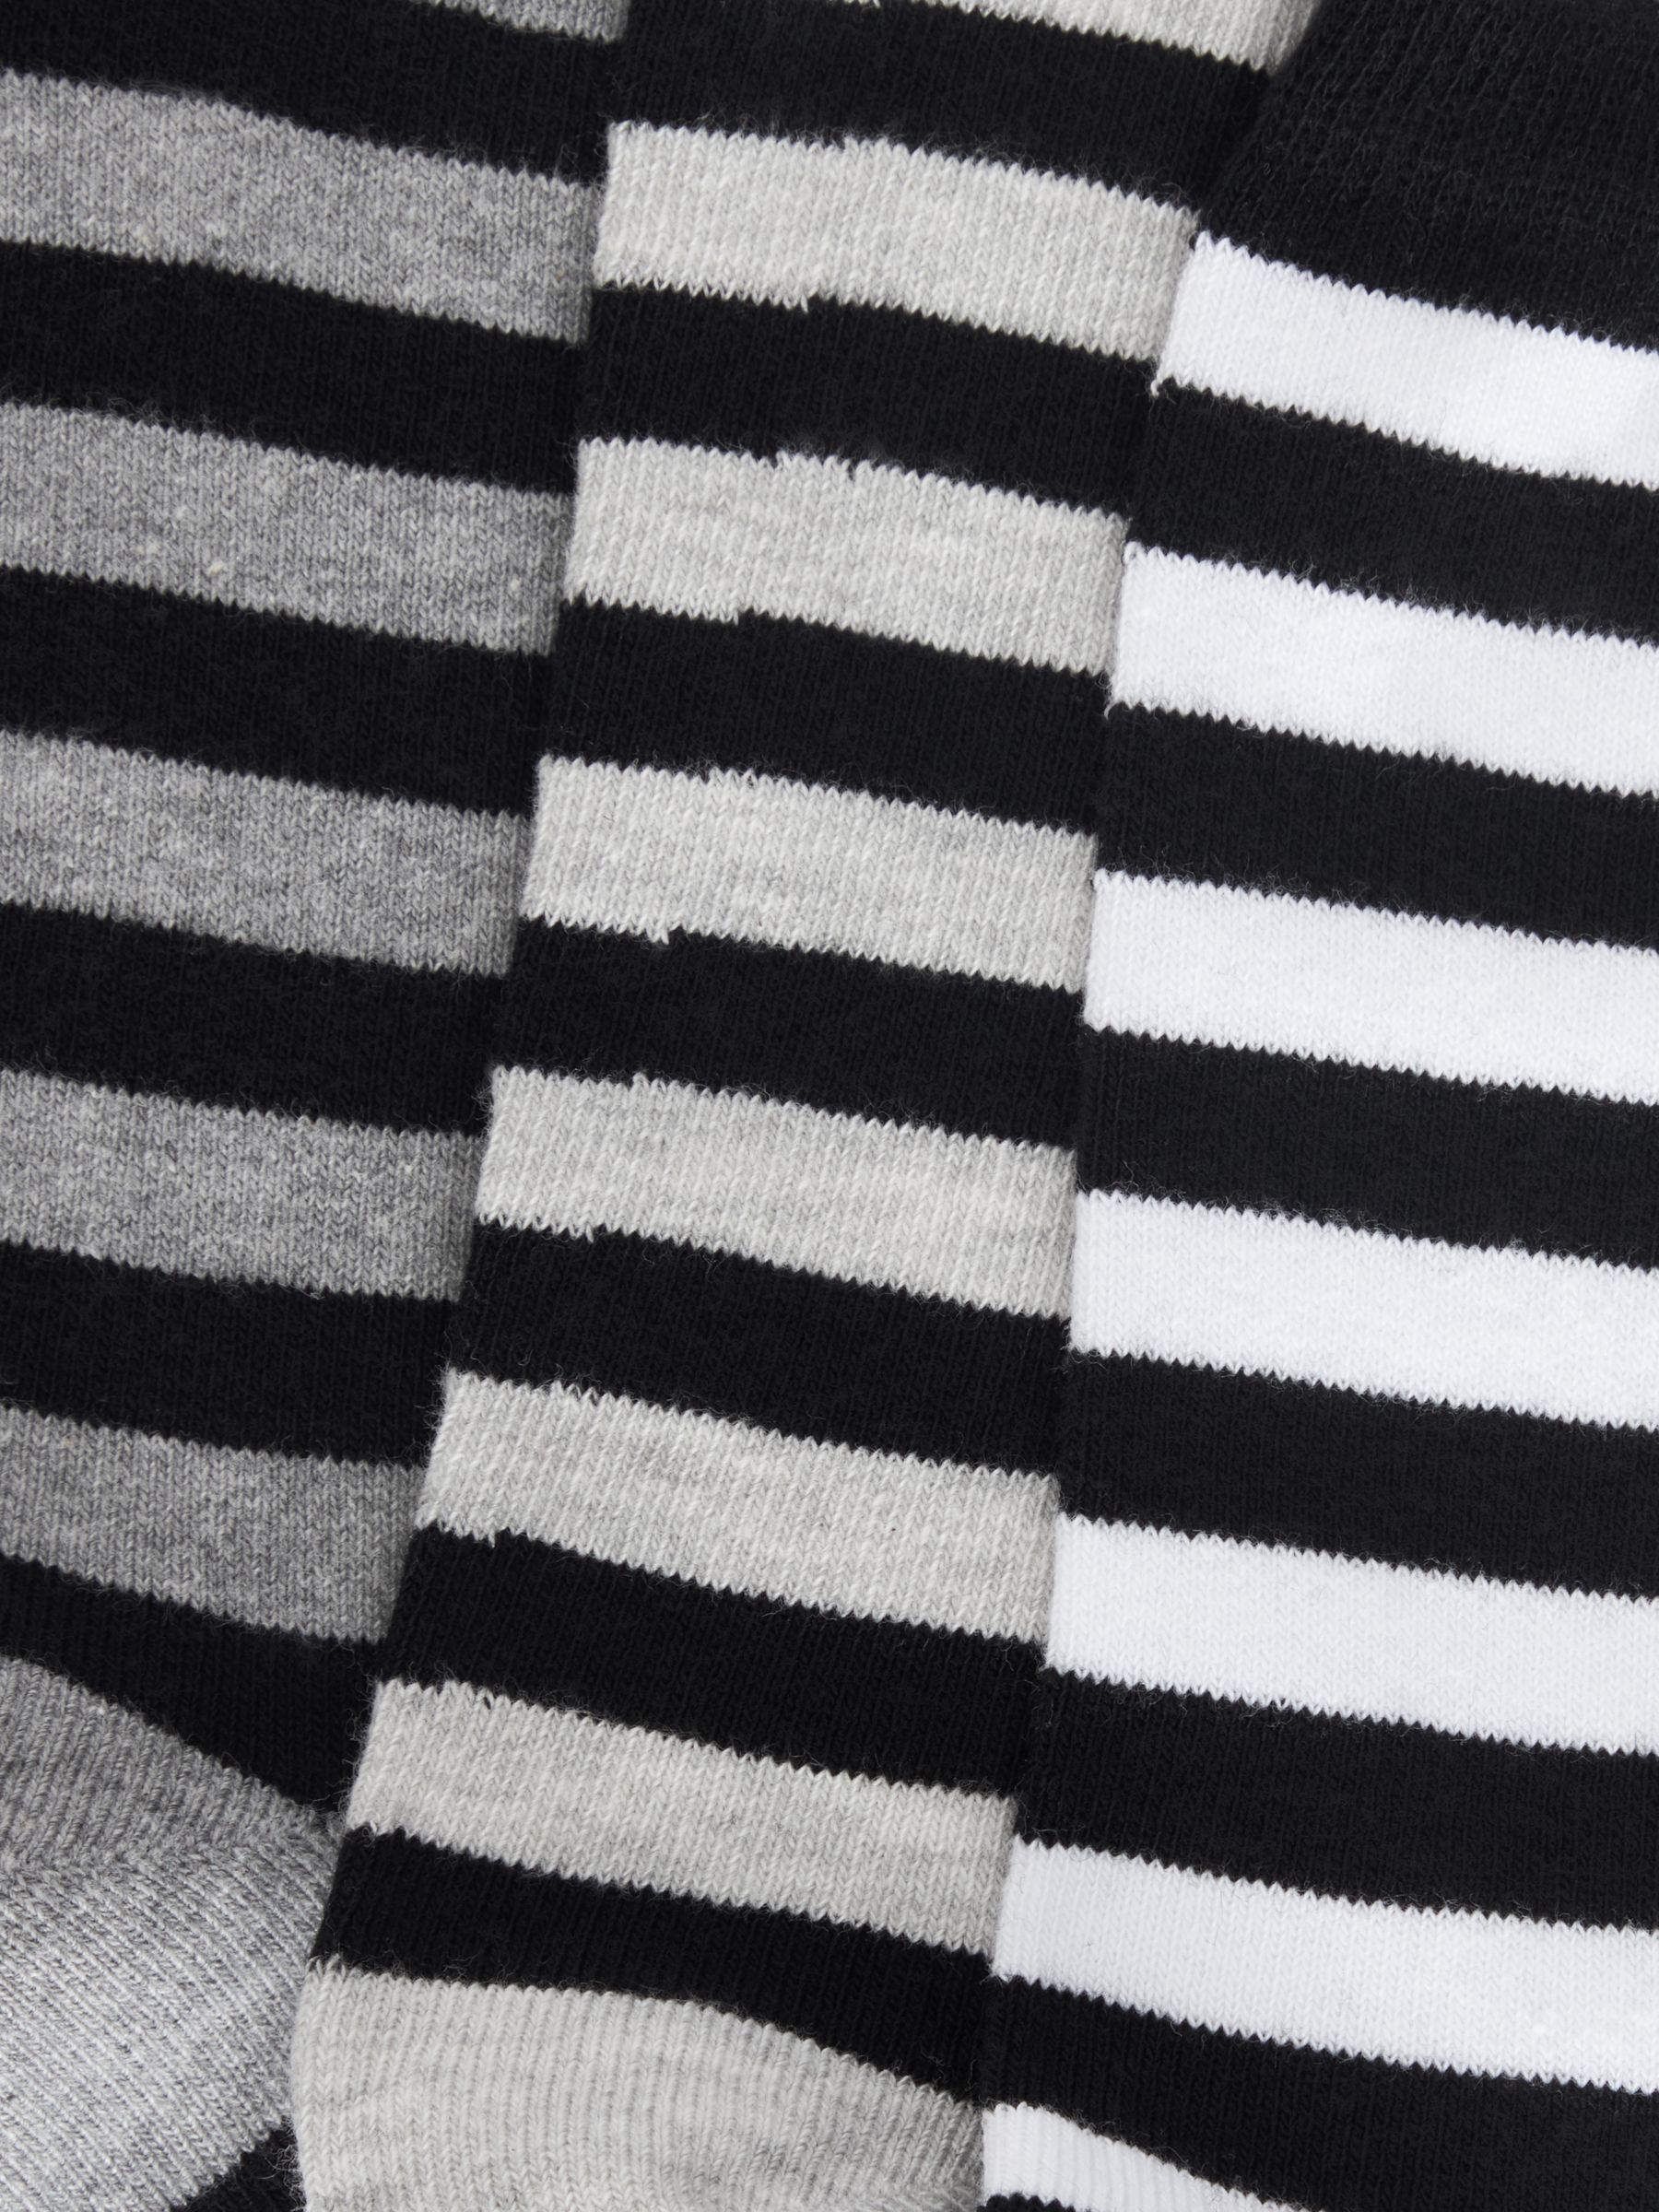 John Lewis Stripe Organic Cotton Mix Ankle Socks, Pack of 3, Black/Grey ...